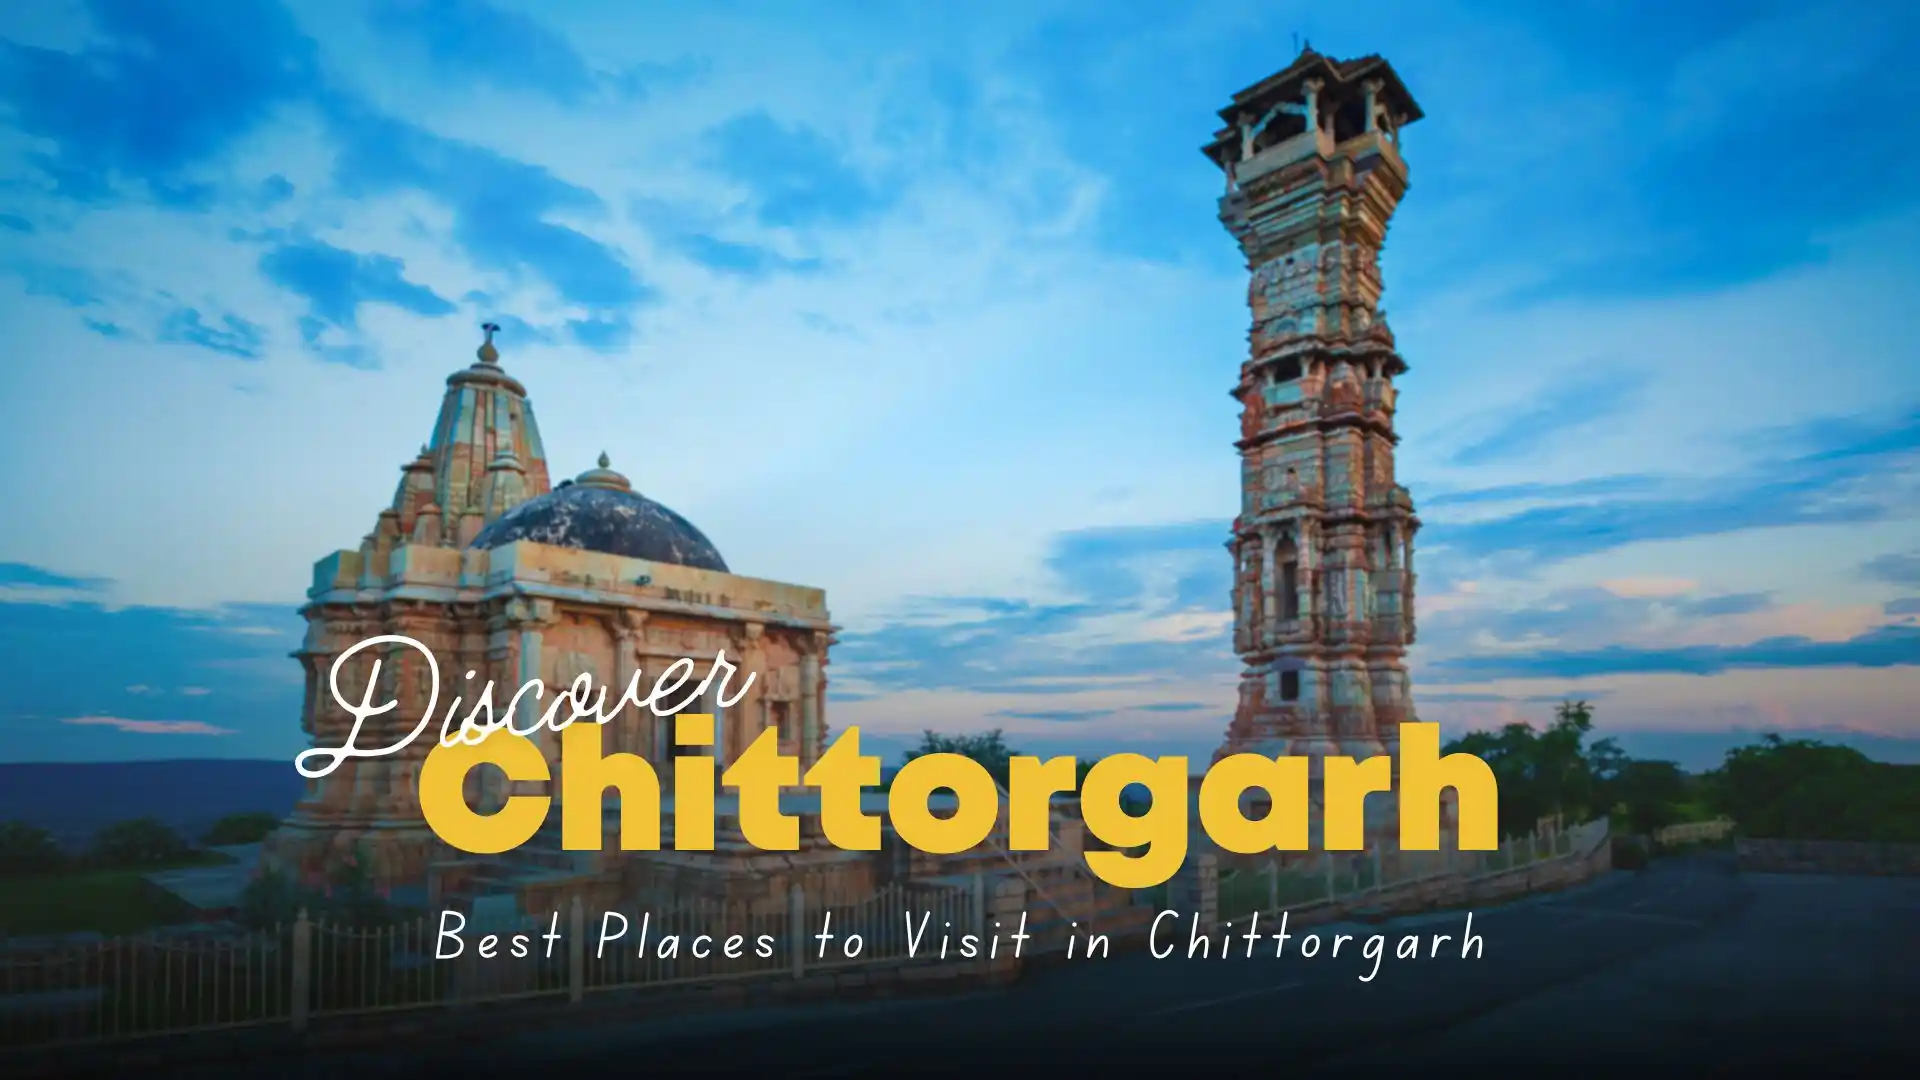 Discover Chittorgarh: Best Places to Visit in Chittorgarh